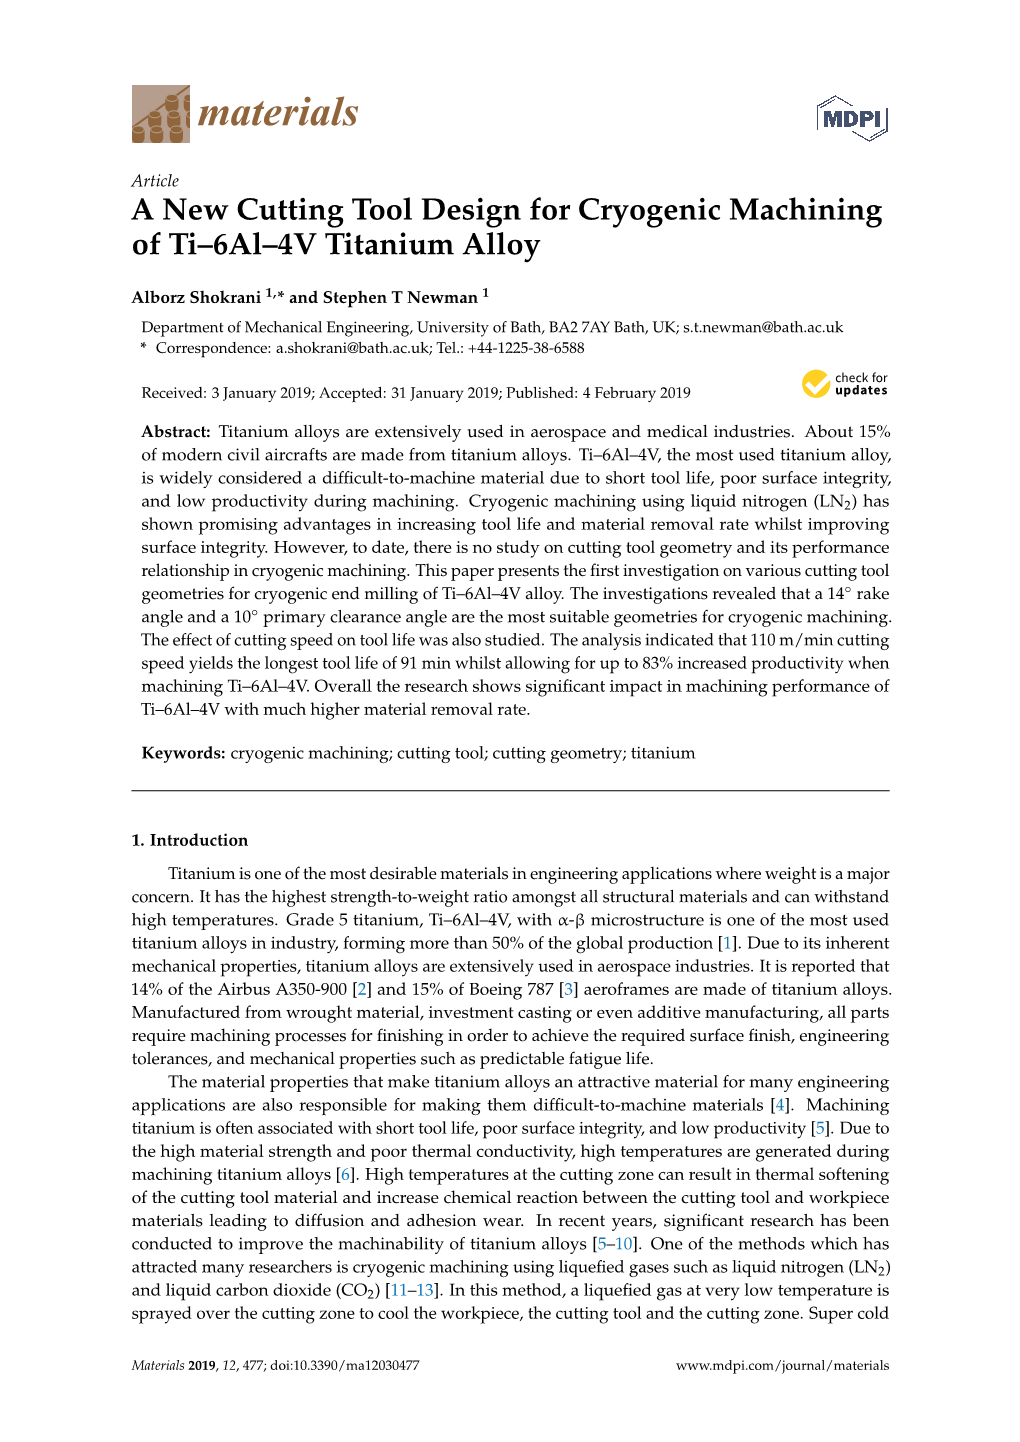 A New Cutting Tool Design for Cryogenic Machining of Ti–6Al–4V Titanium Alloy